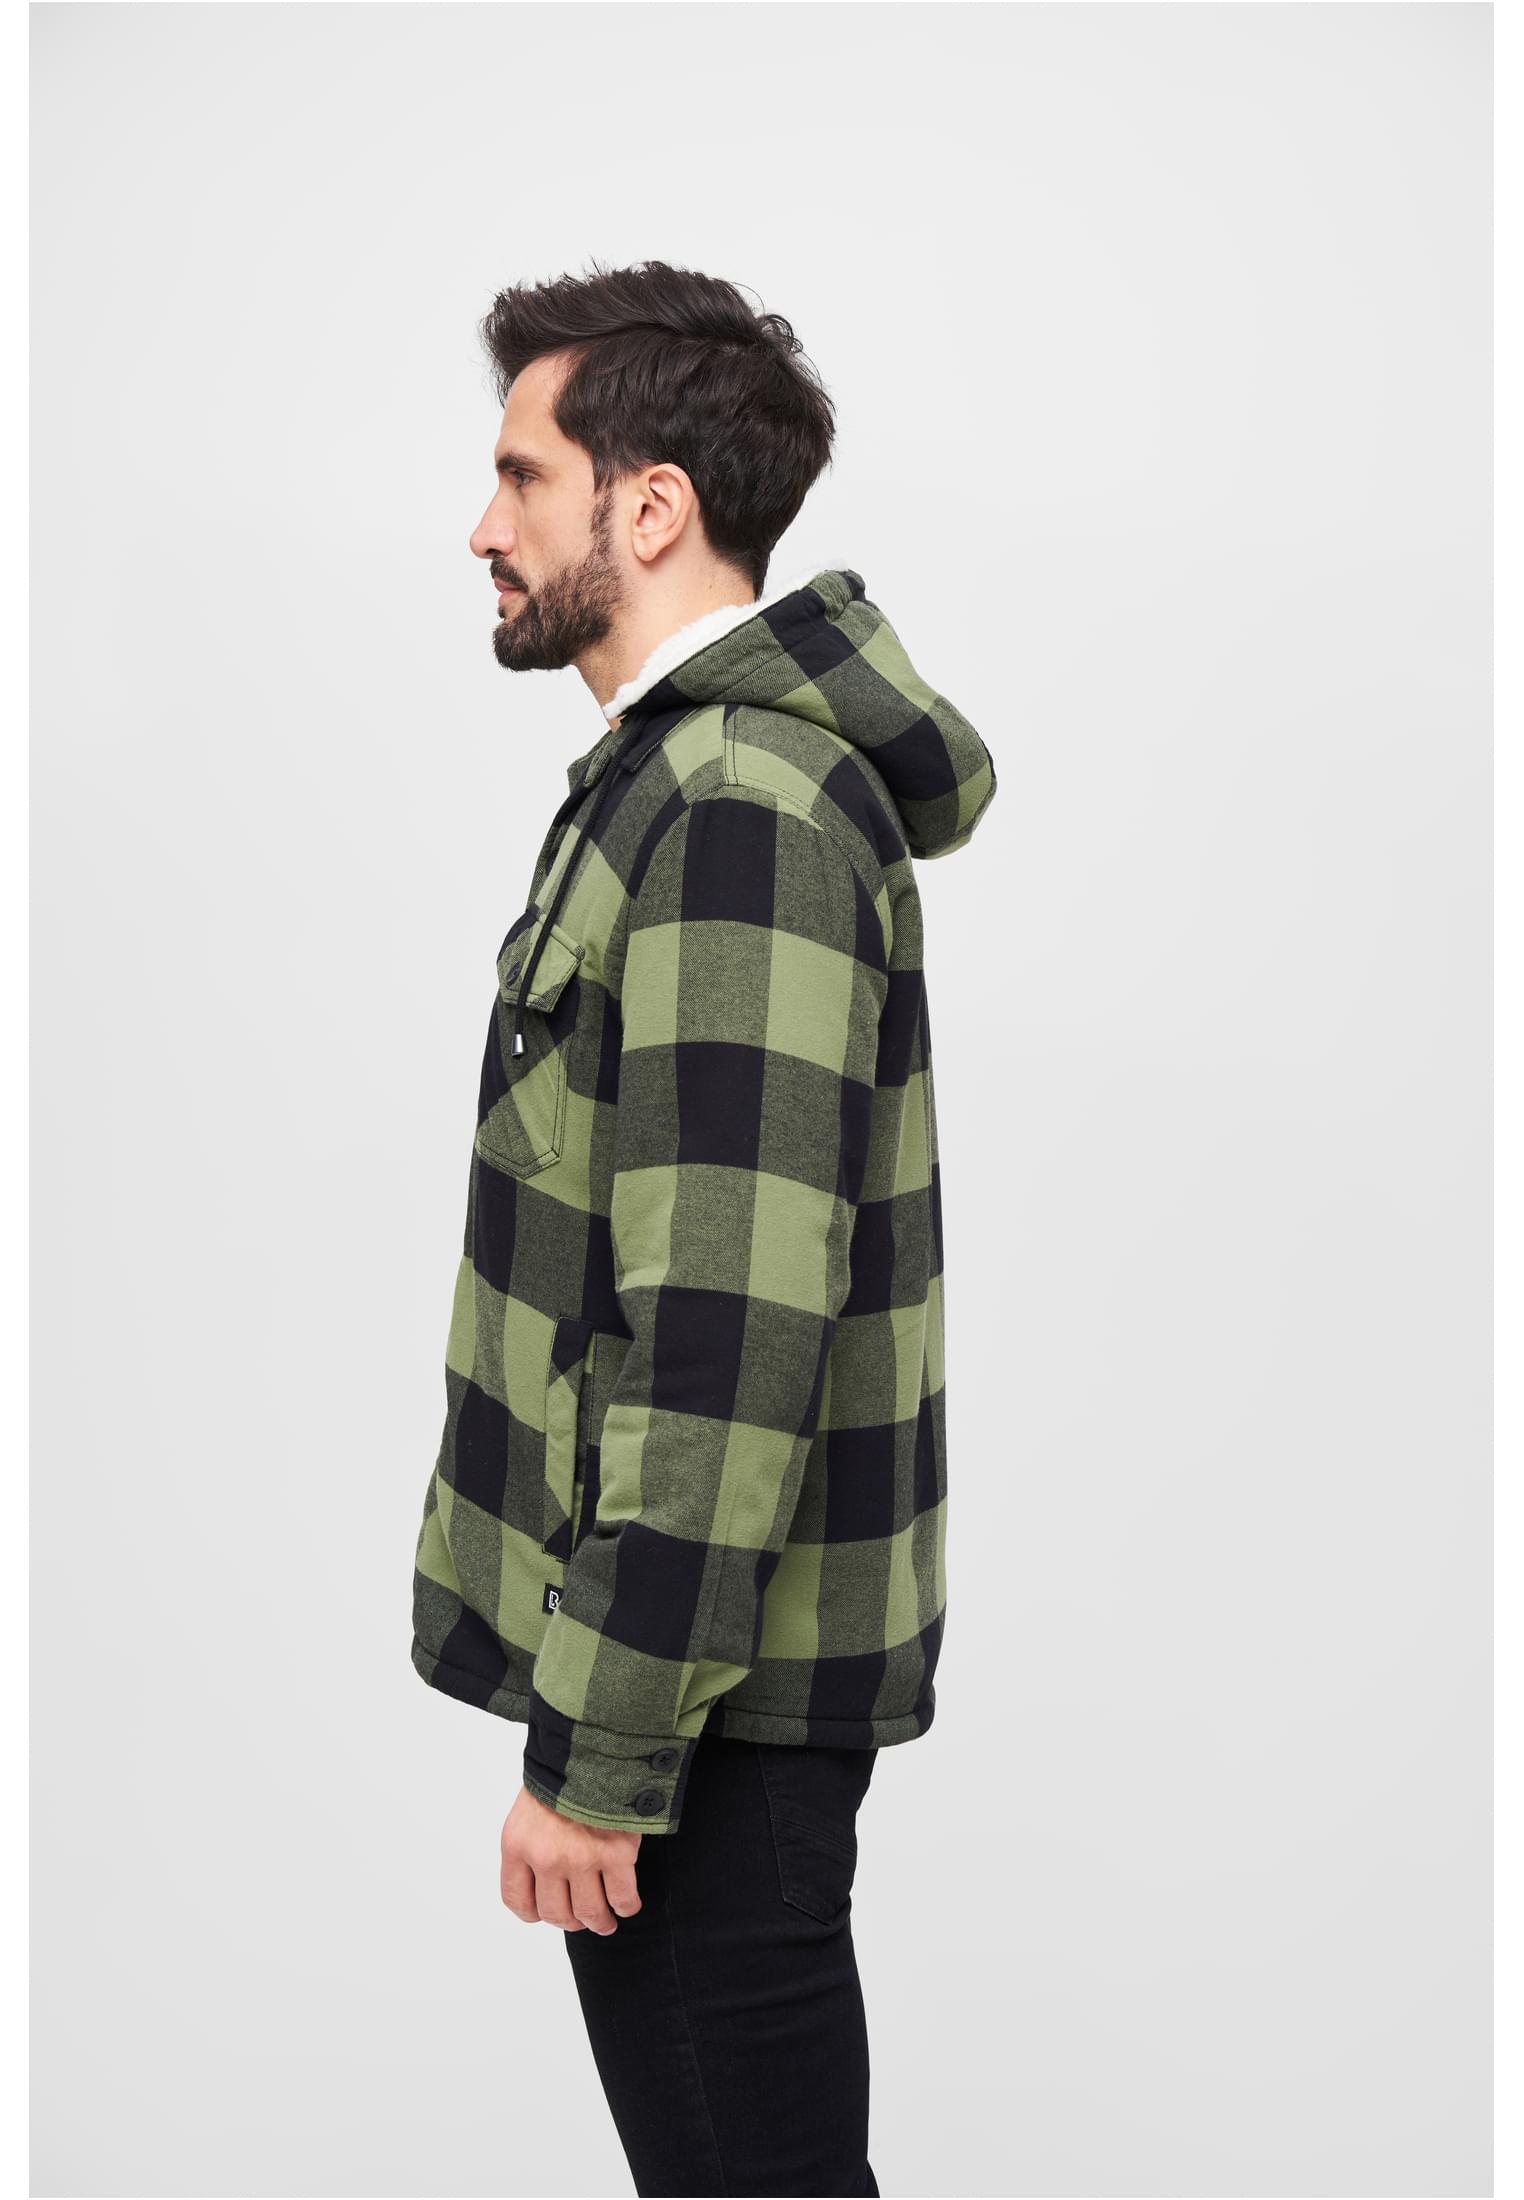 Jacken Lumberjacket Hooded in Farbe black/olive